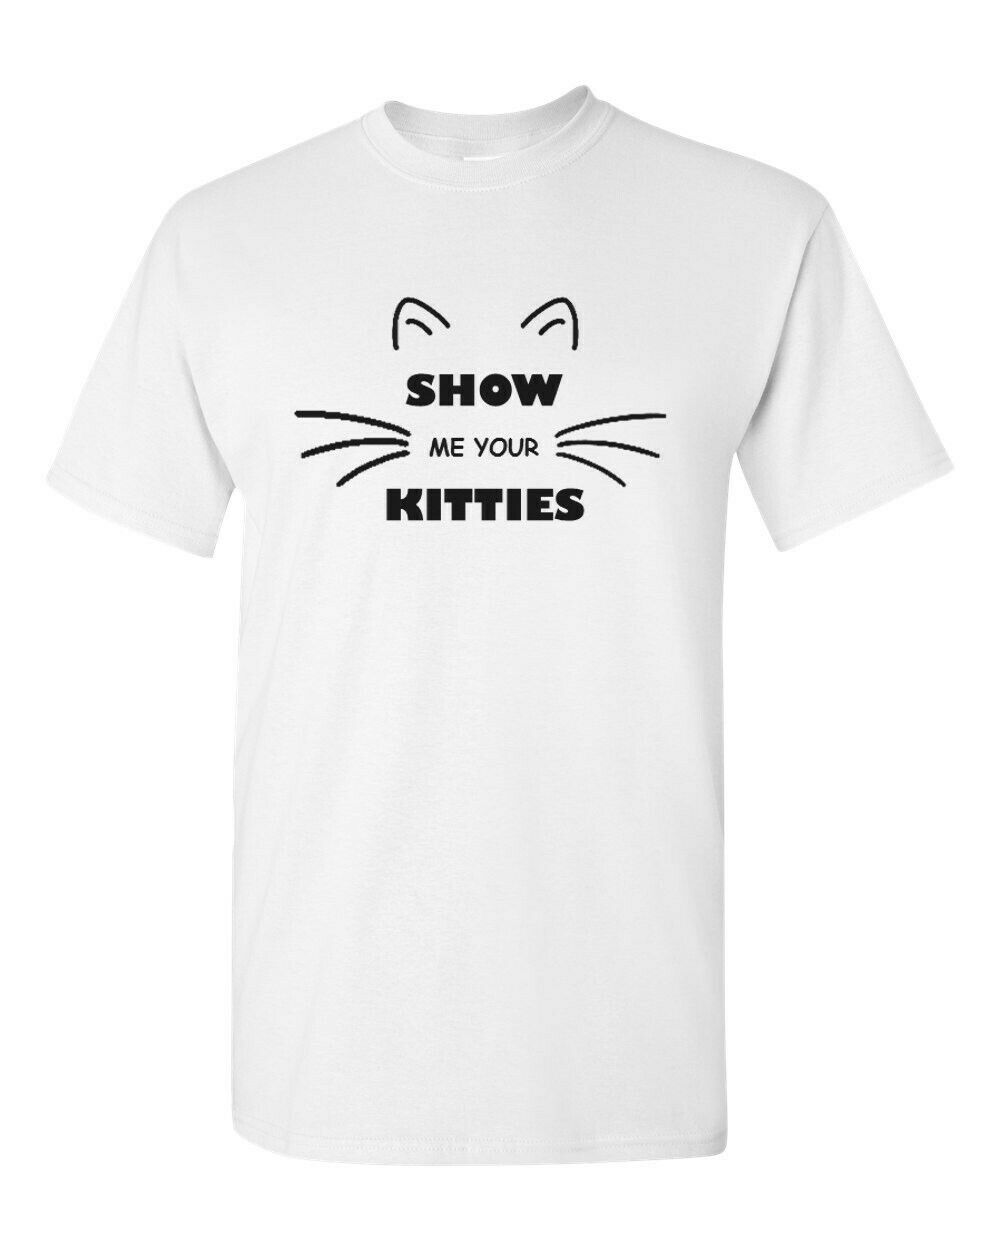 Show Me Your Kitties T-shirt Joke Humor Cat Lover Gift Funny Cool Shirt ...